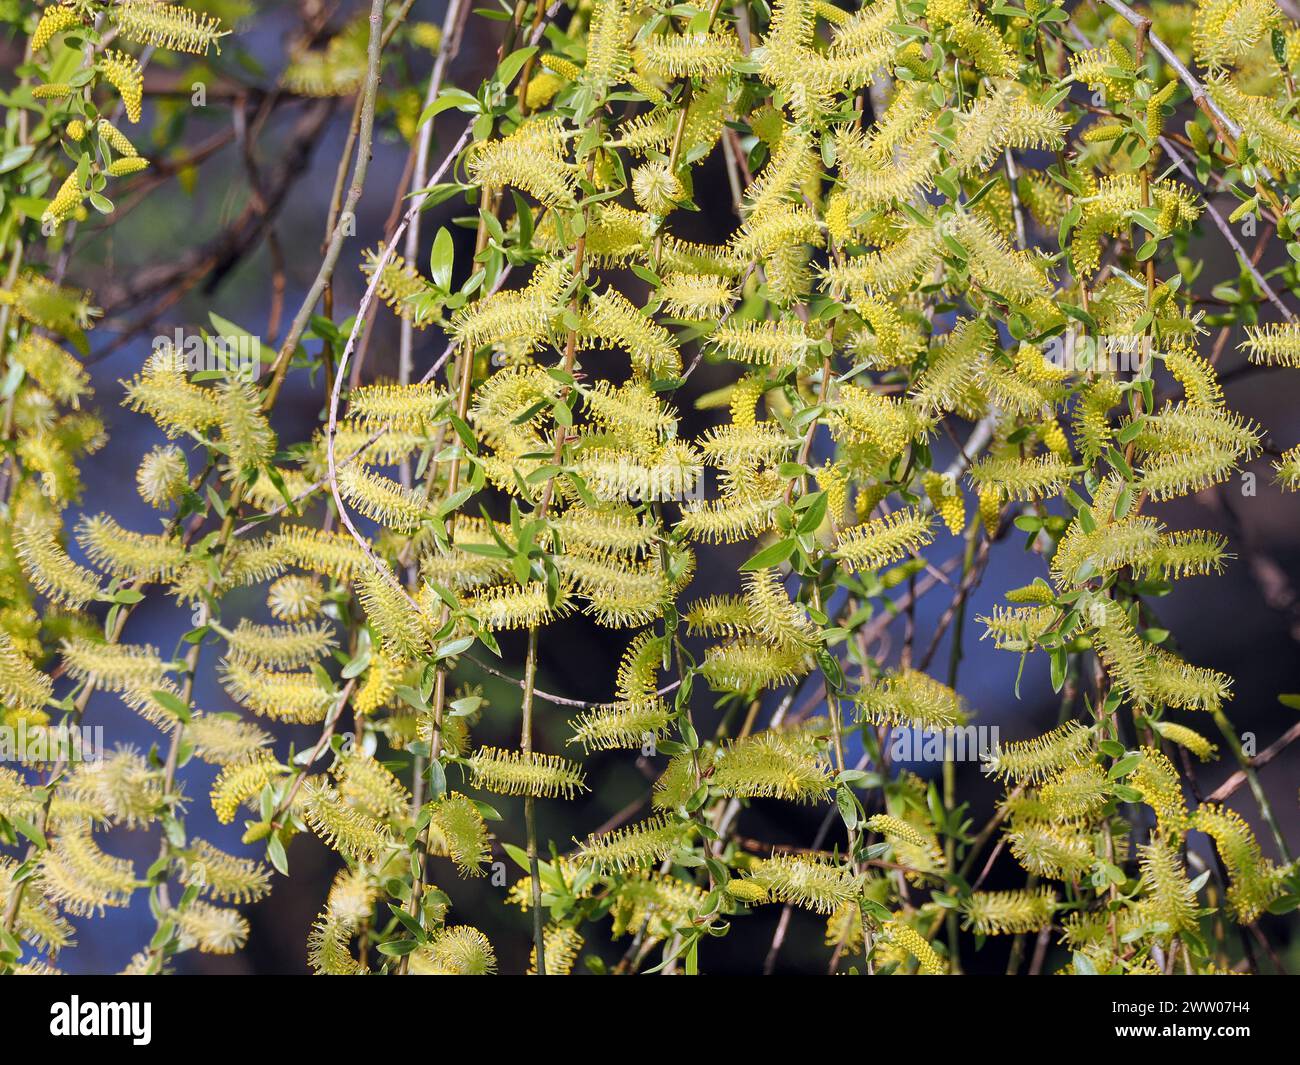 Weeping Golden Willow, Silber-Weide, Saule commun, Salix alba Tristis, szomorúfűz, Budapest, Hungary, Magyarország, Europe Stock Photo